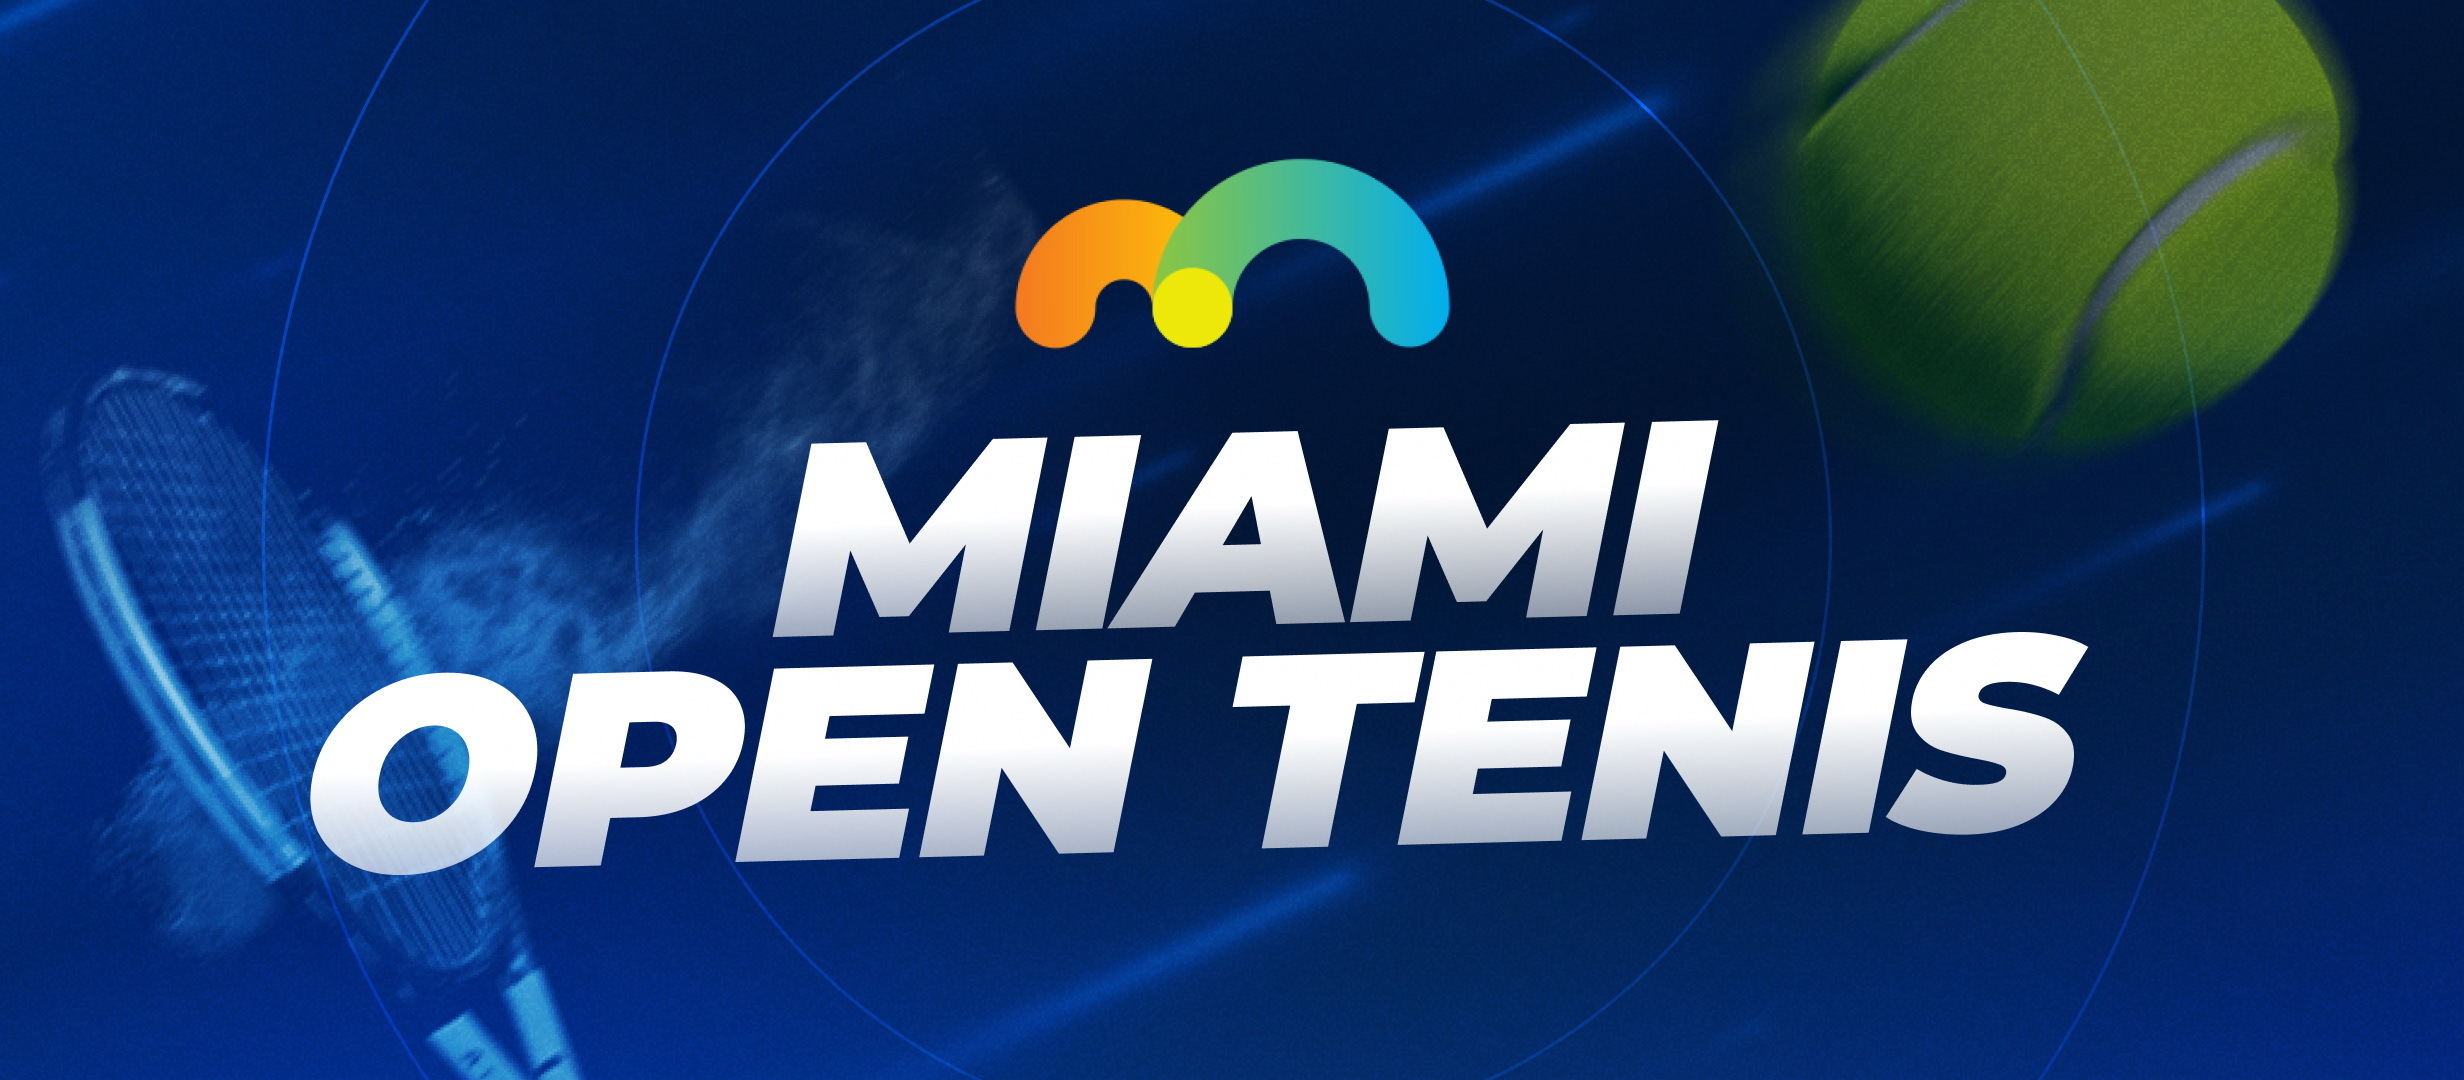 Sorana Cîrstea - Aryna Sabalenka în sferturi la Miami Open